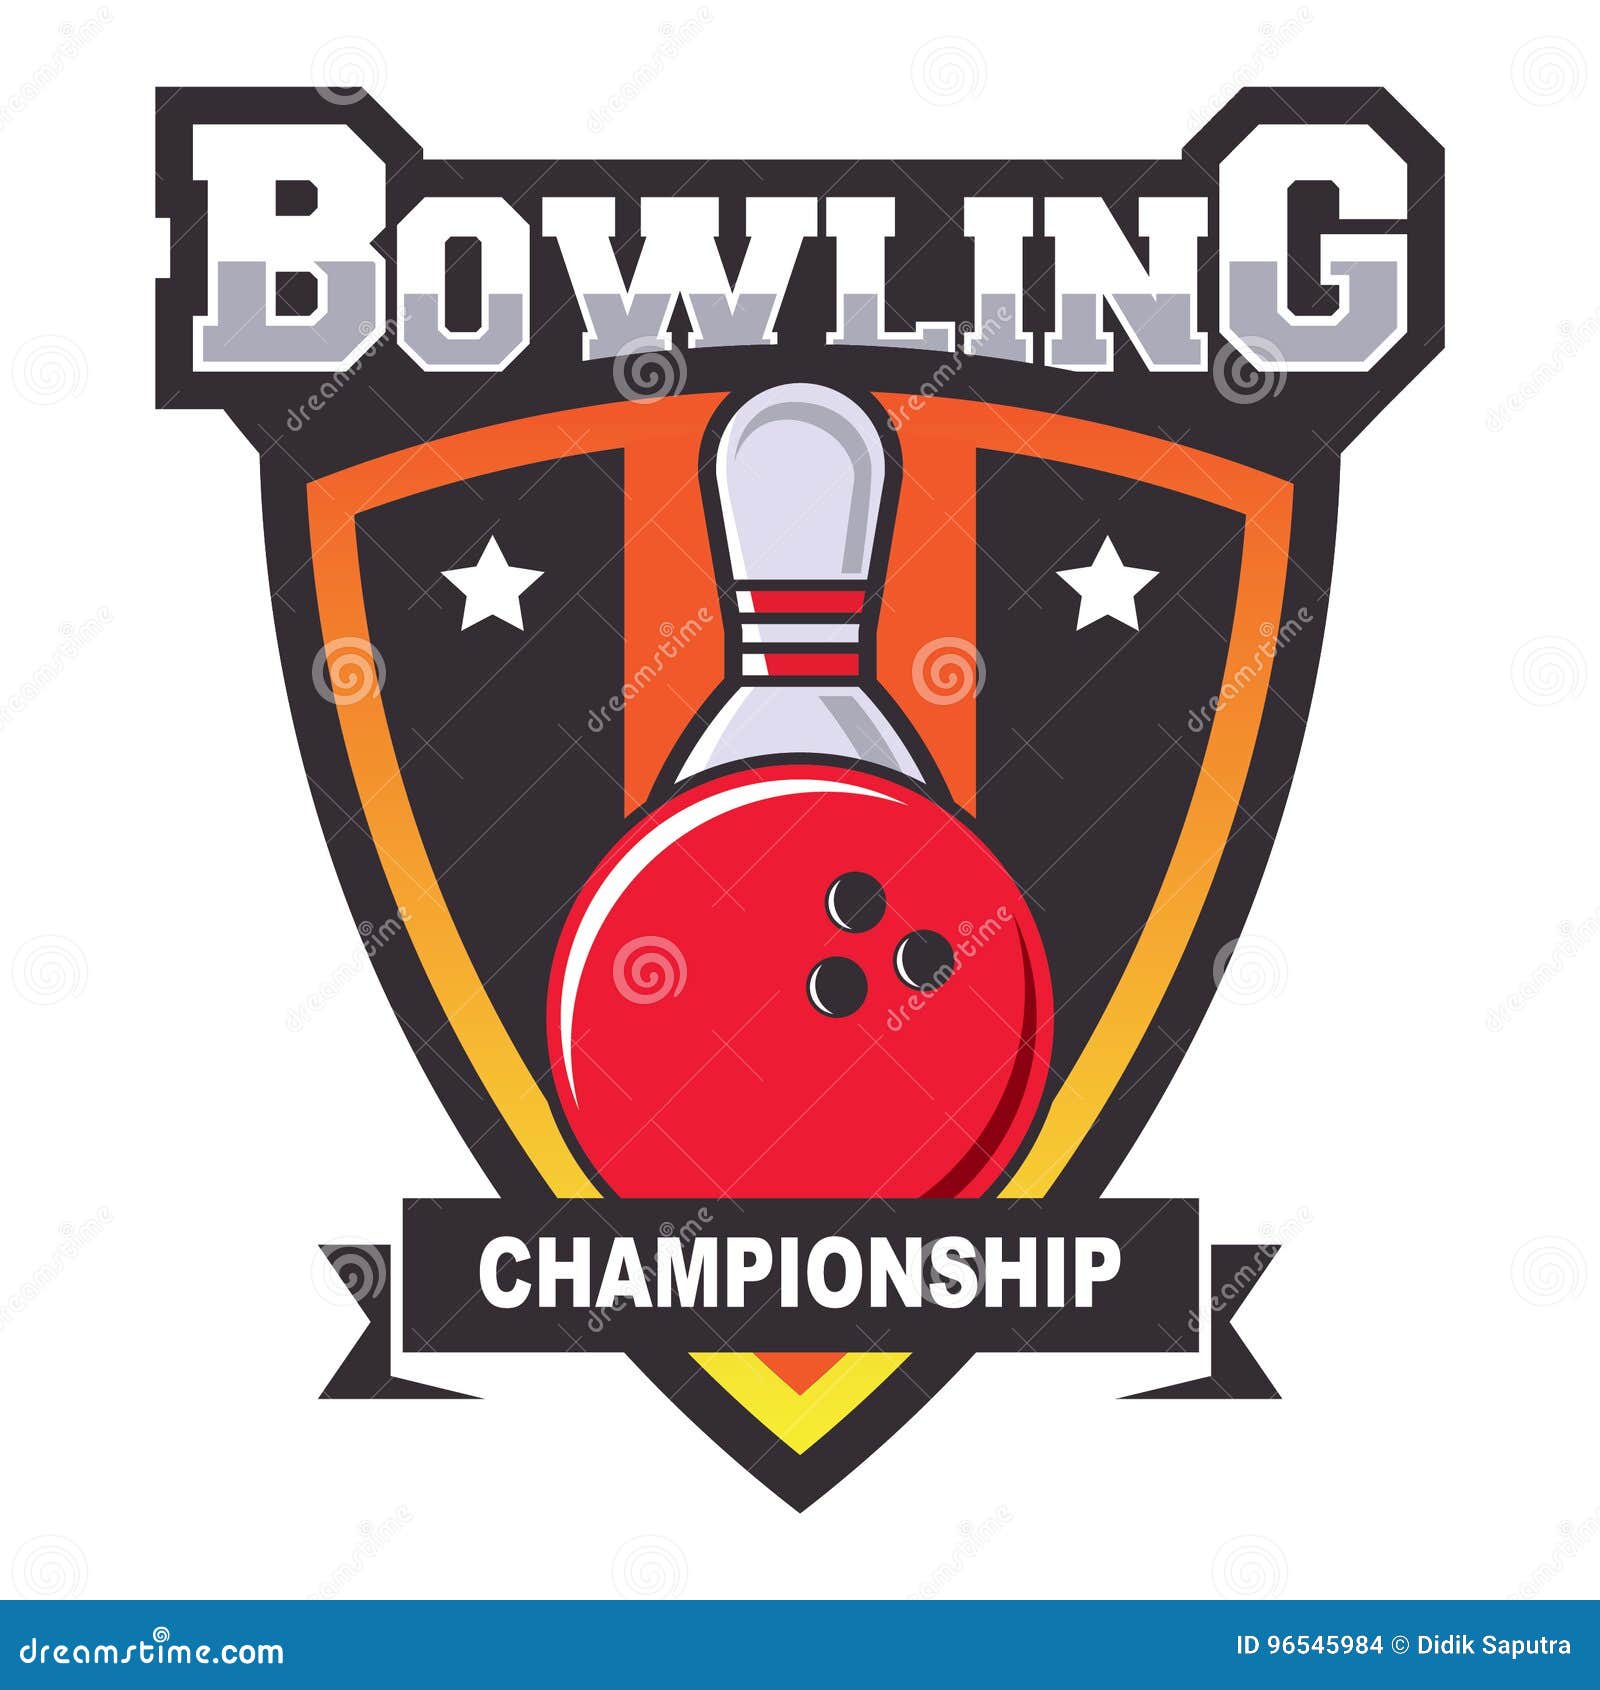 Bowling Logo Design Template Stock Vector - Illustration of bowl ...